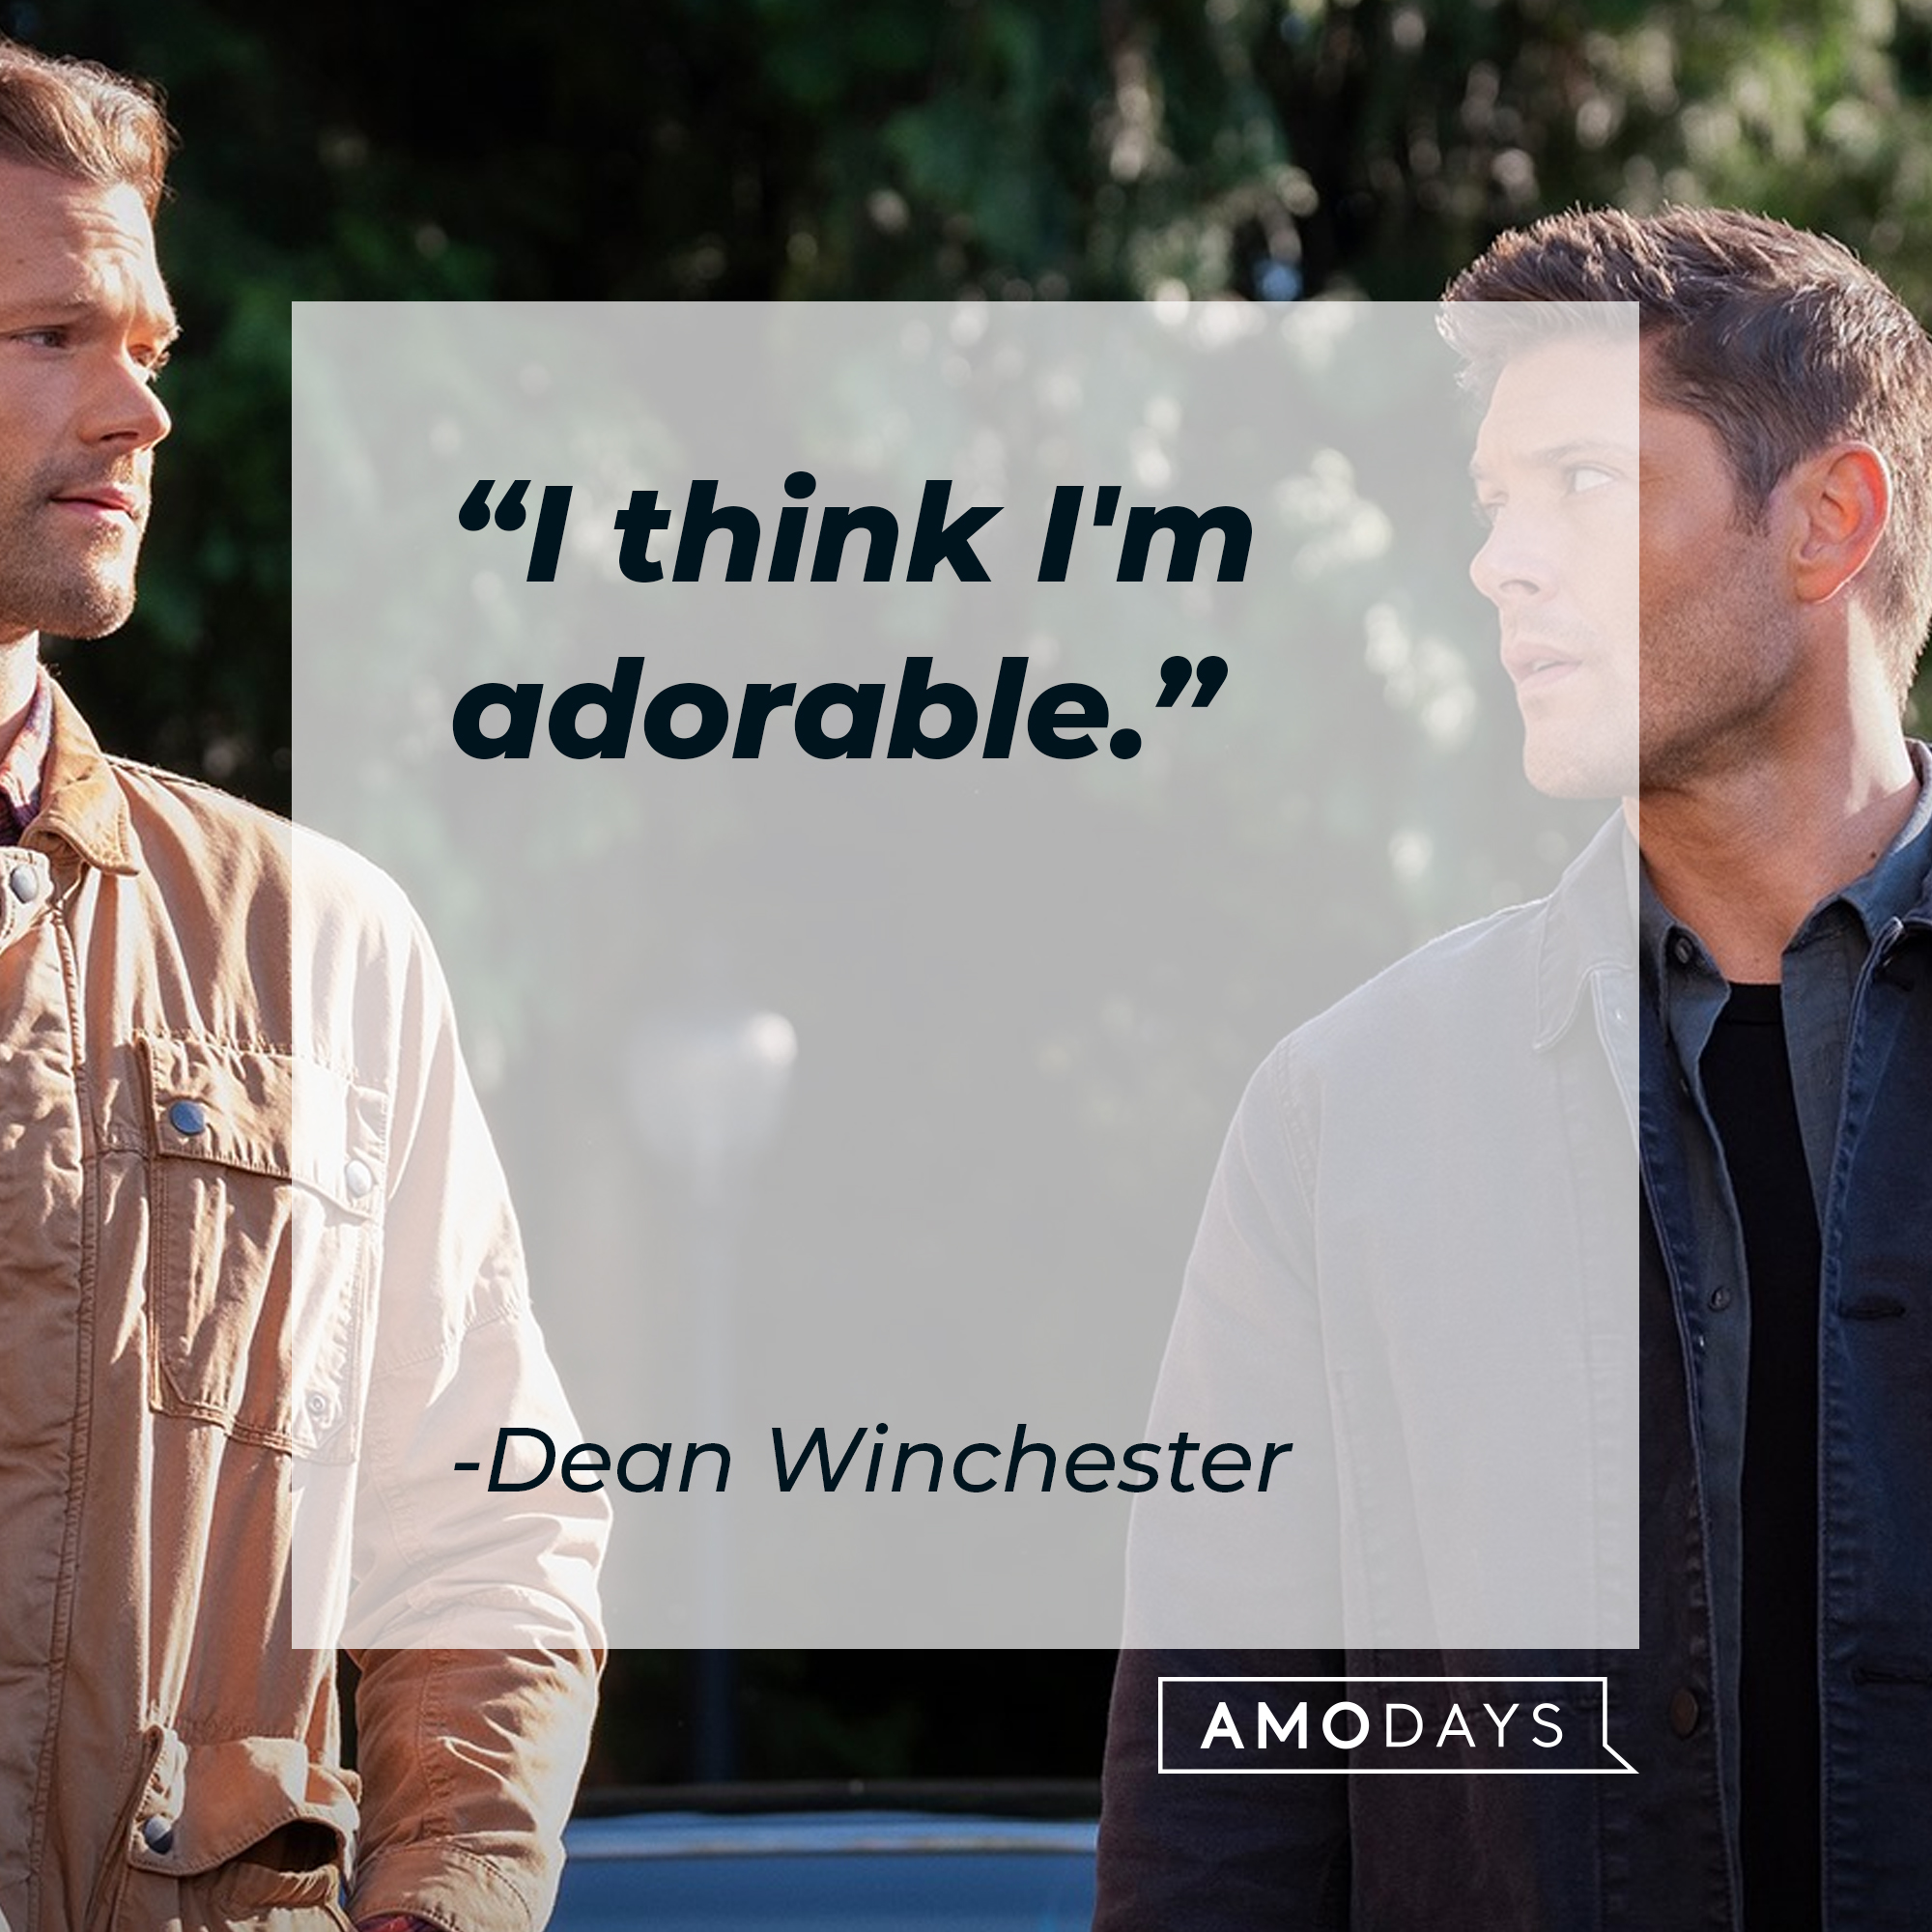 Dean Winchester's quote: "I think I'm adorable." | Source: facebook.com/Supernatural